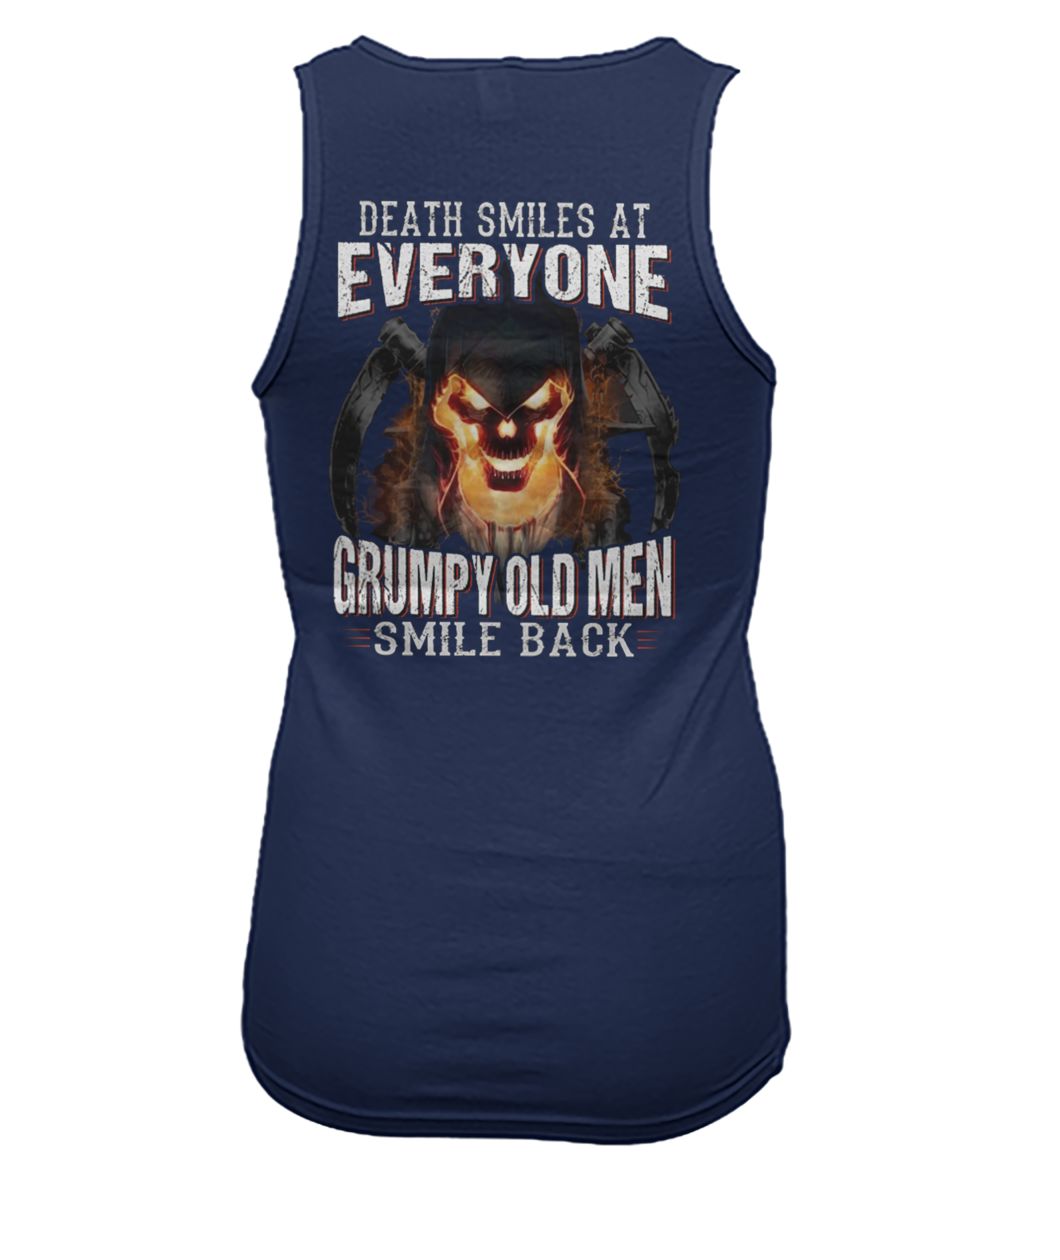 Death smiles at everyone grumpy old men smile back women's tank top